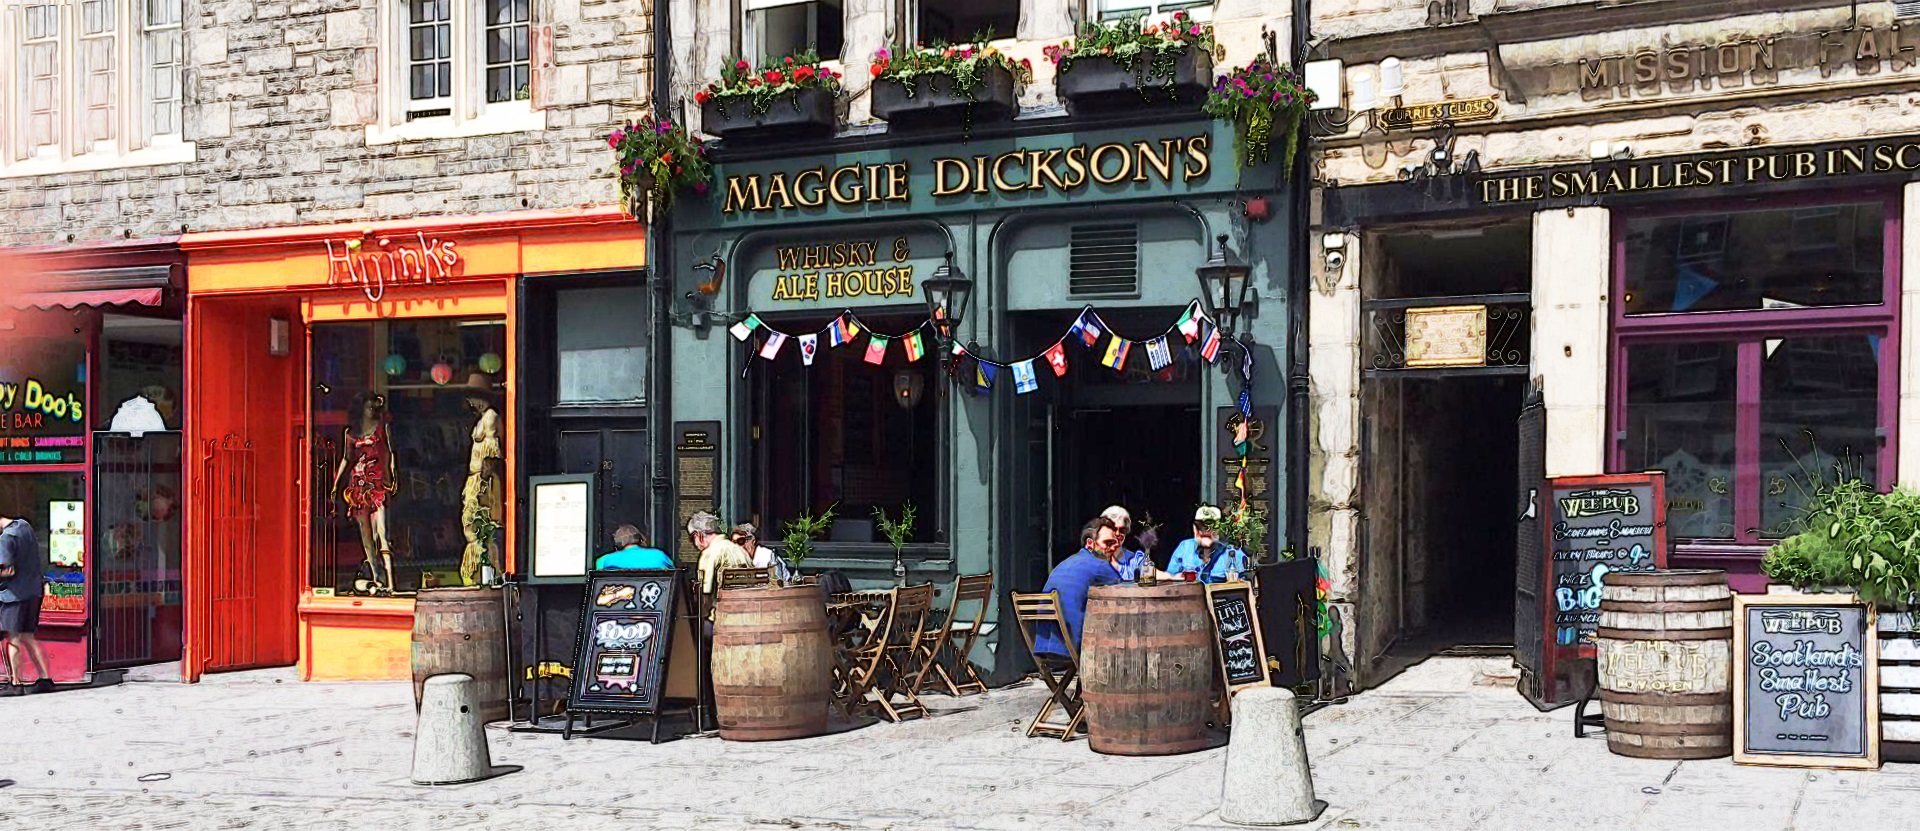 Picture of Maggie Dicksons - Grassmarket - Edinburgh